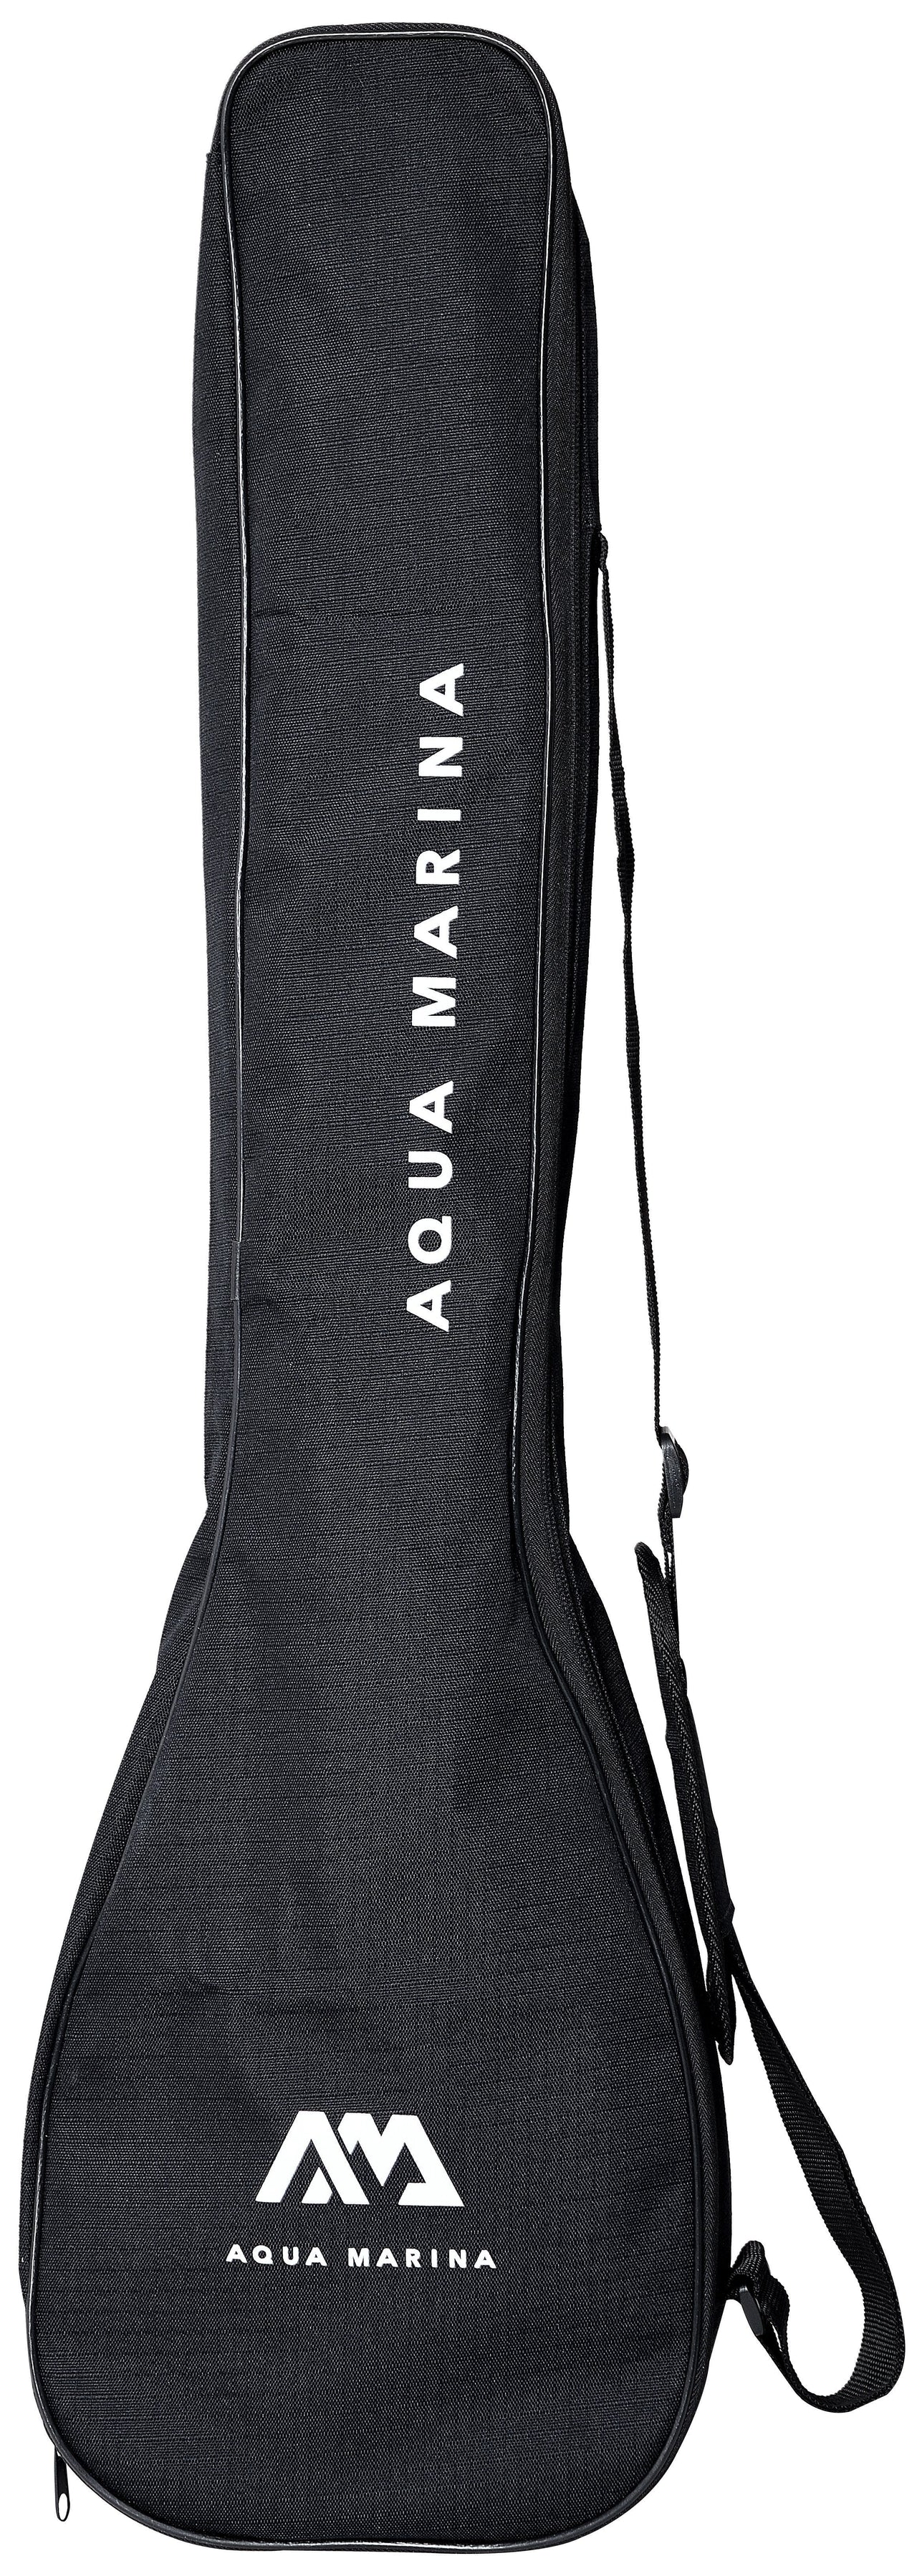 Aqua Marina Paddle Bag